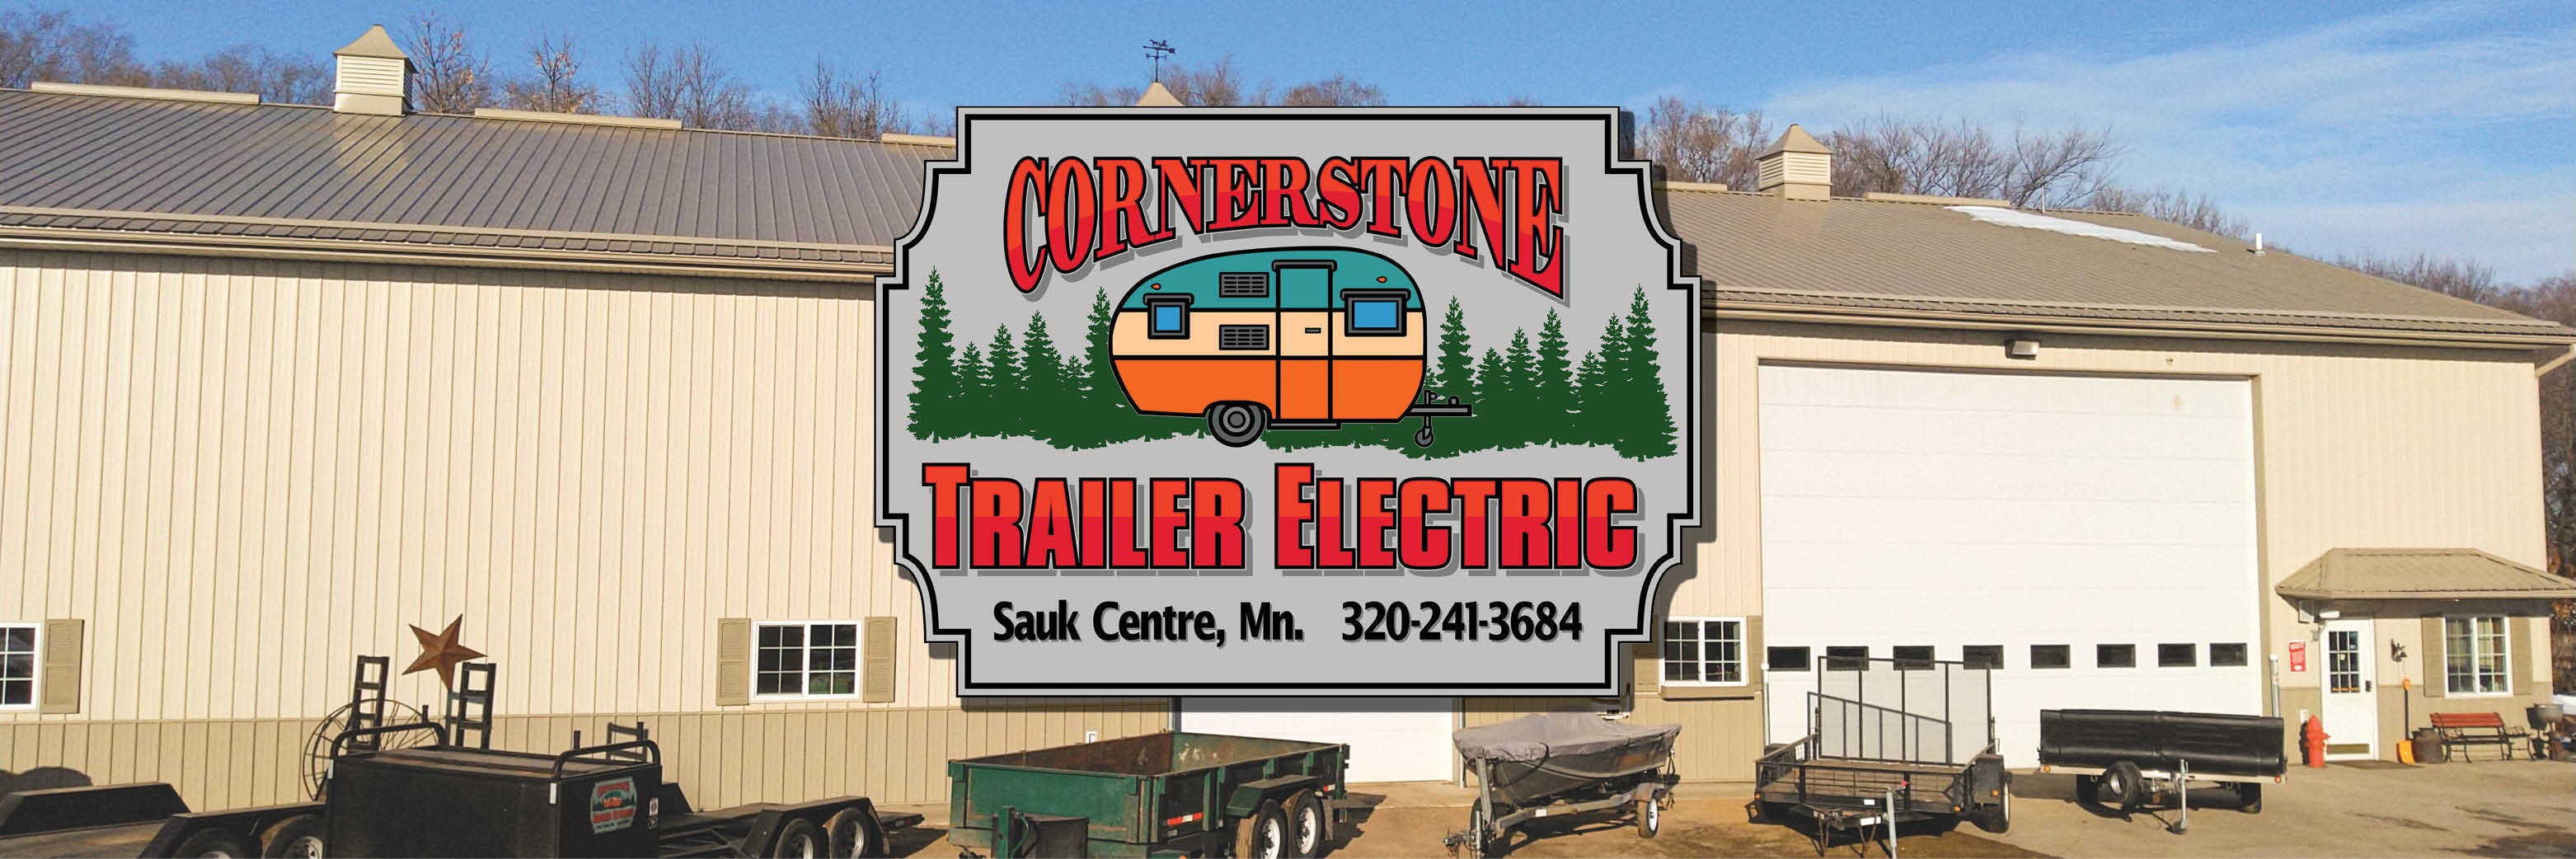 Cornerstone Trailer Electric